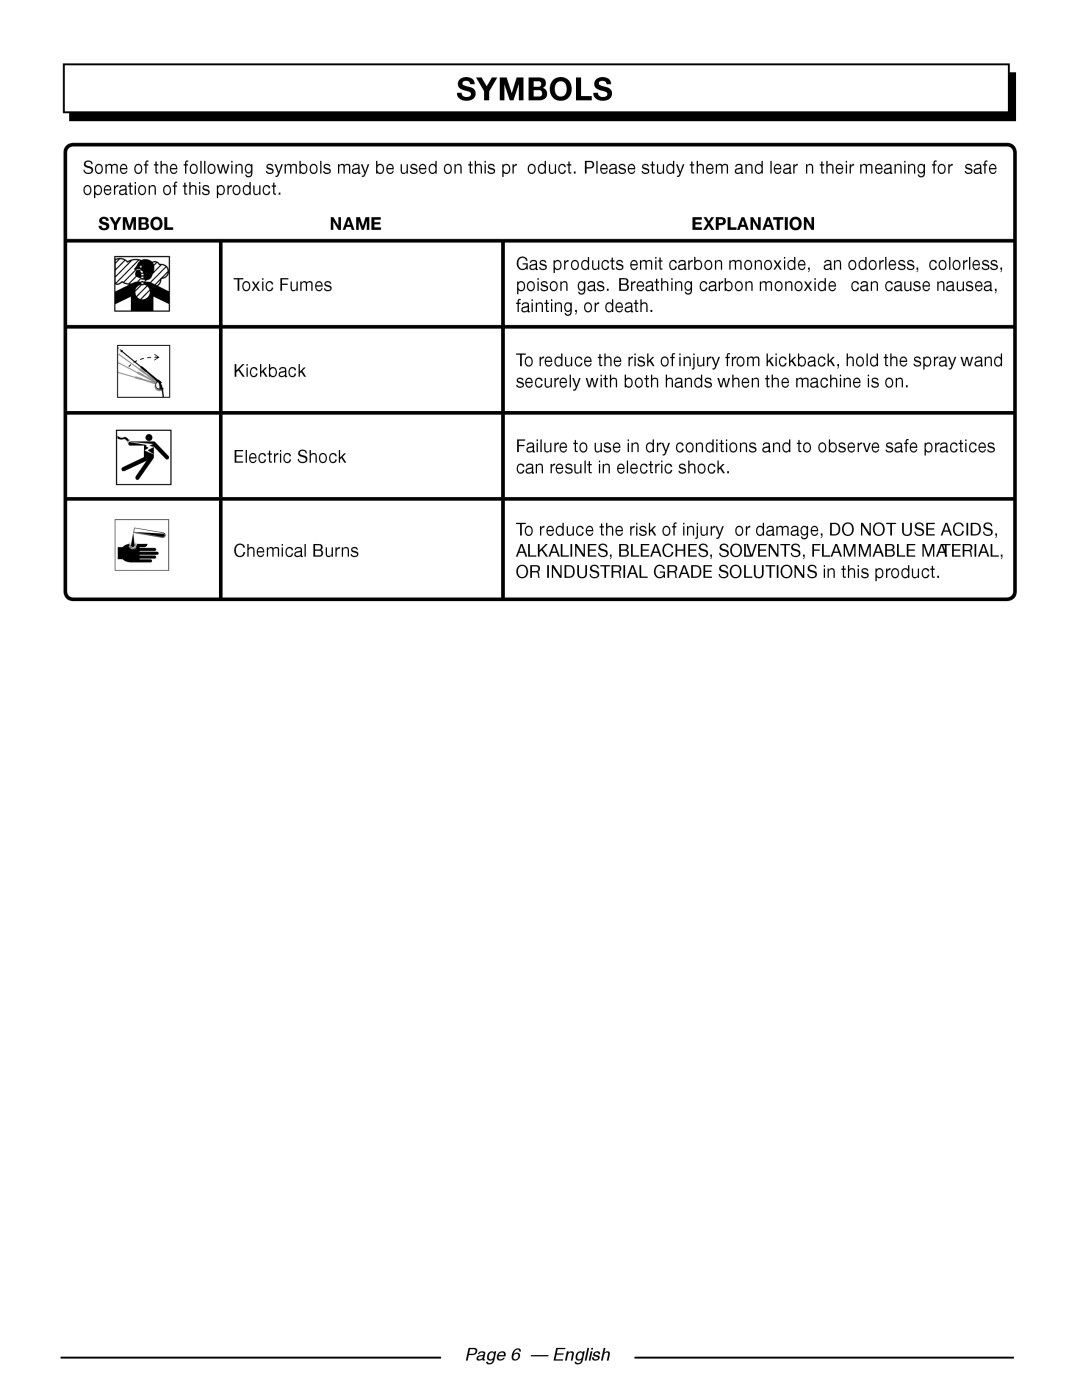 Homelite UT80911, UT80709 manuel dutilisation Symbols, Page 6 - English, Alkalines, Bleaches, Solvents, Flammable Material 